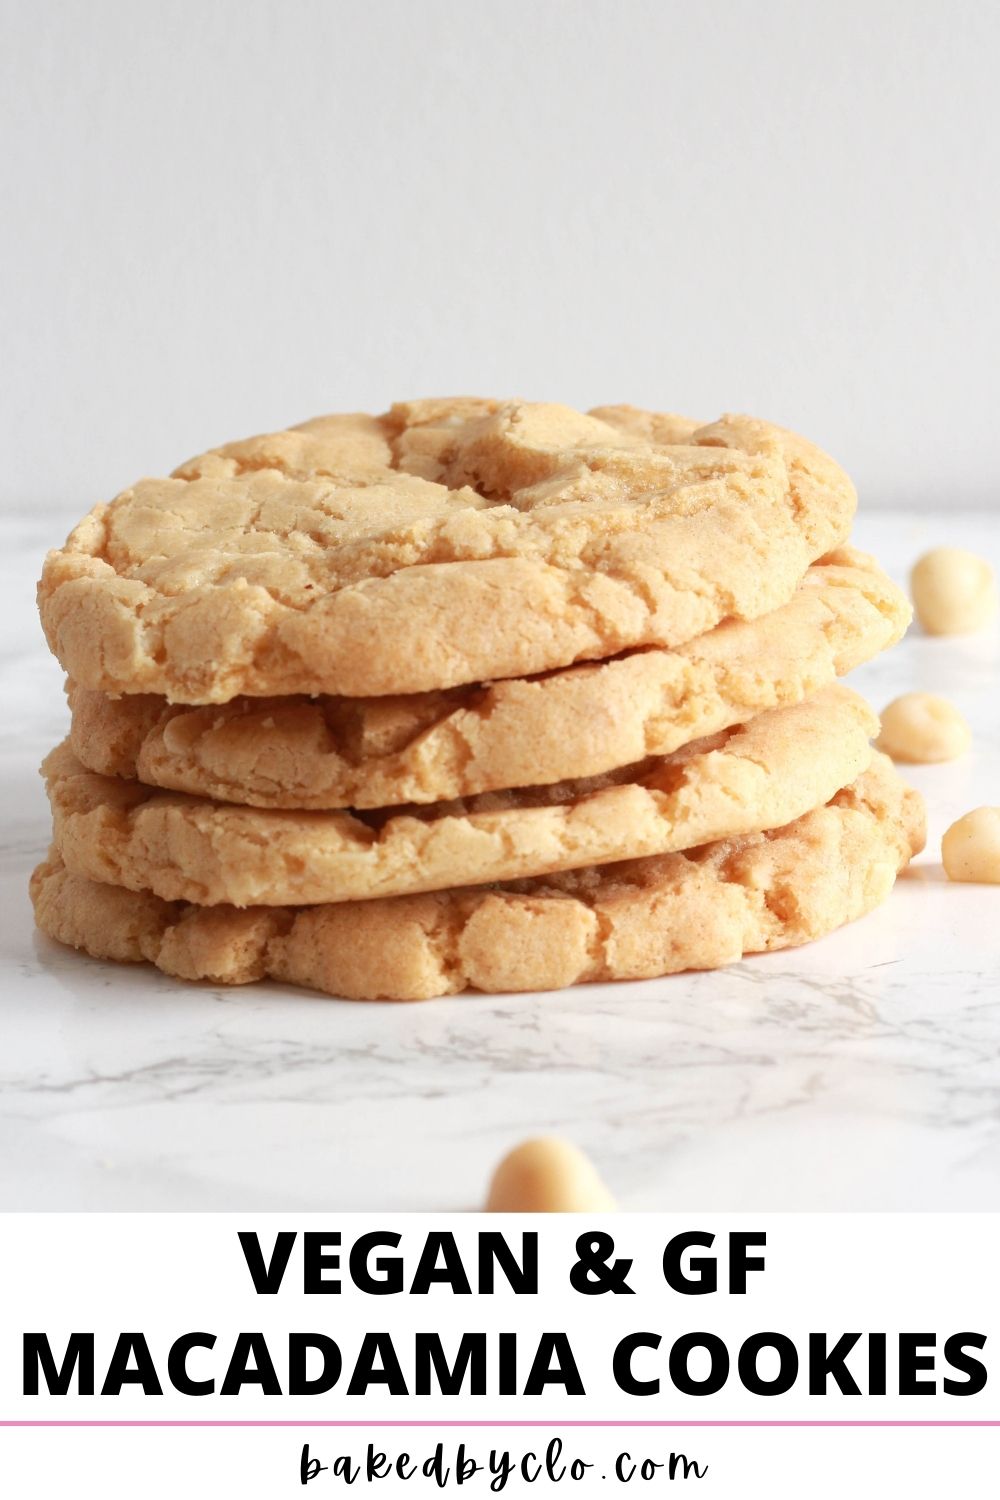 Pinterest Pin - image shows stack of 4 cookies alongside the text "vegan & GF macadamia cookies"